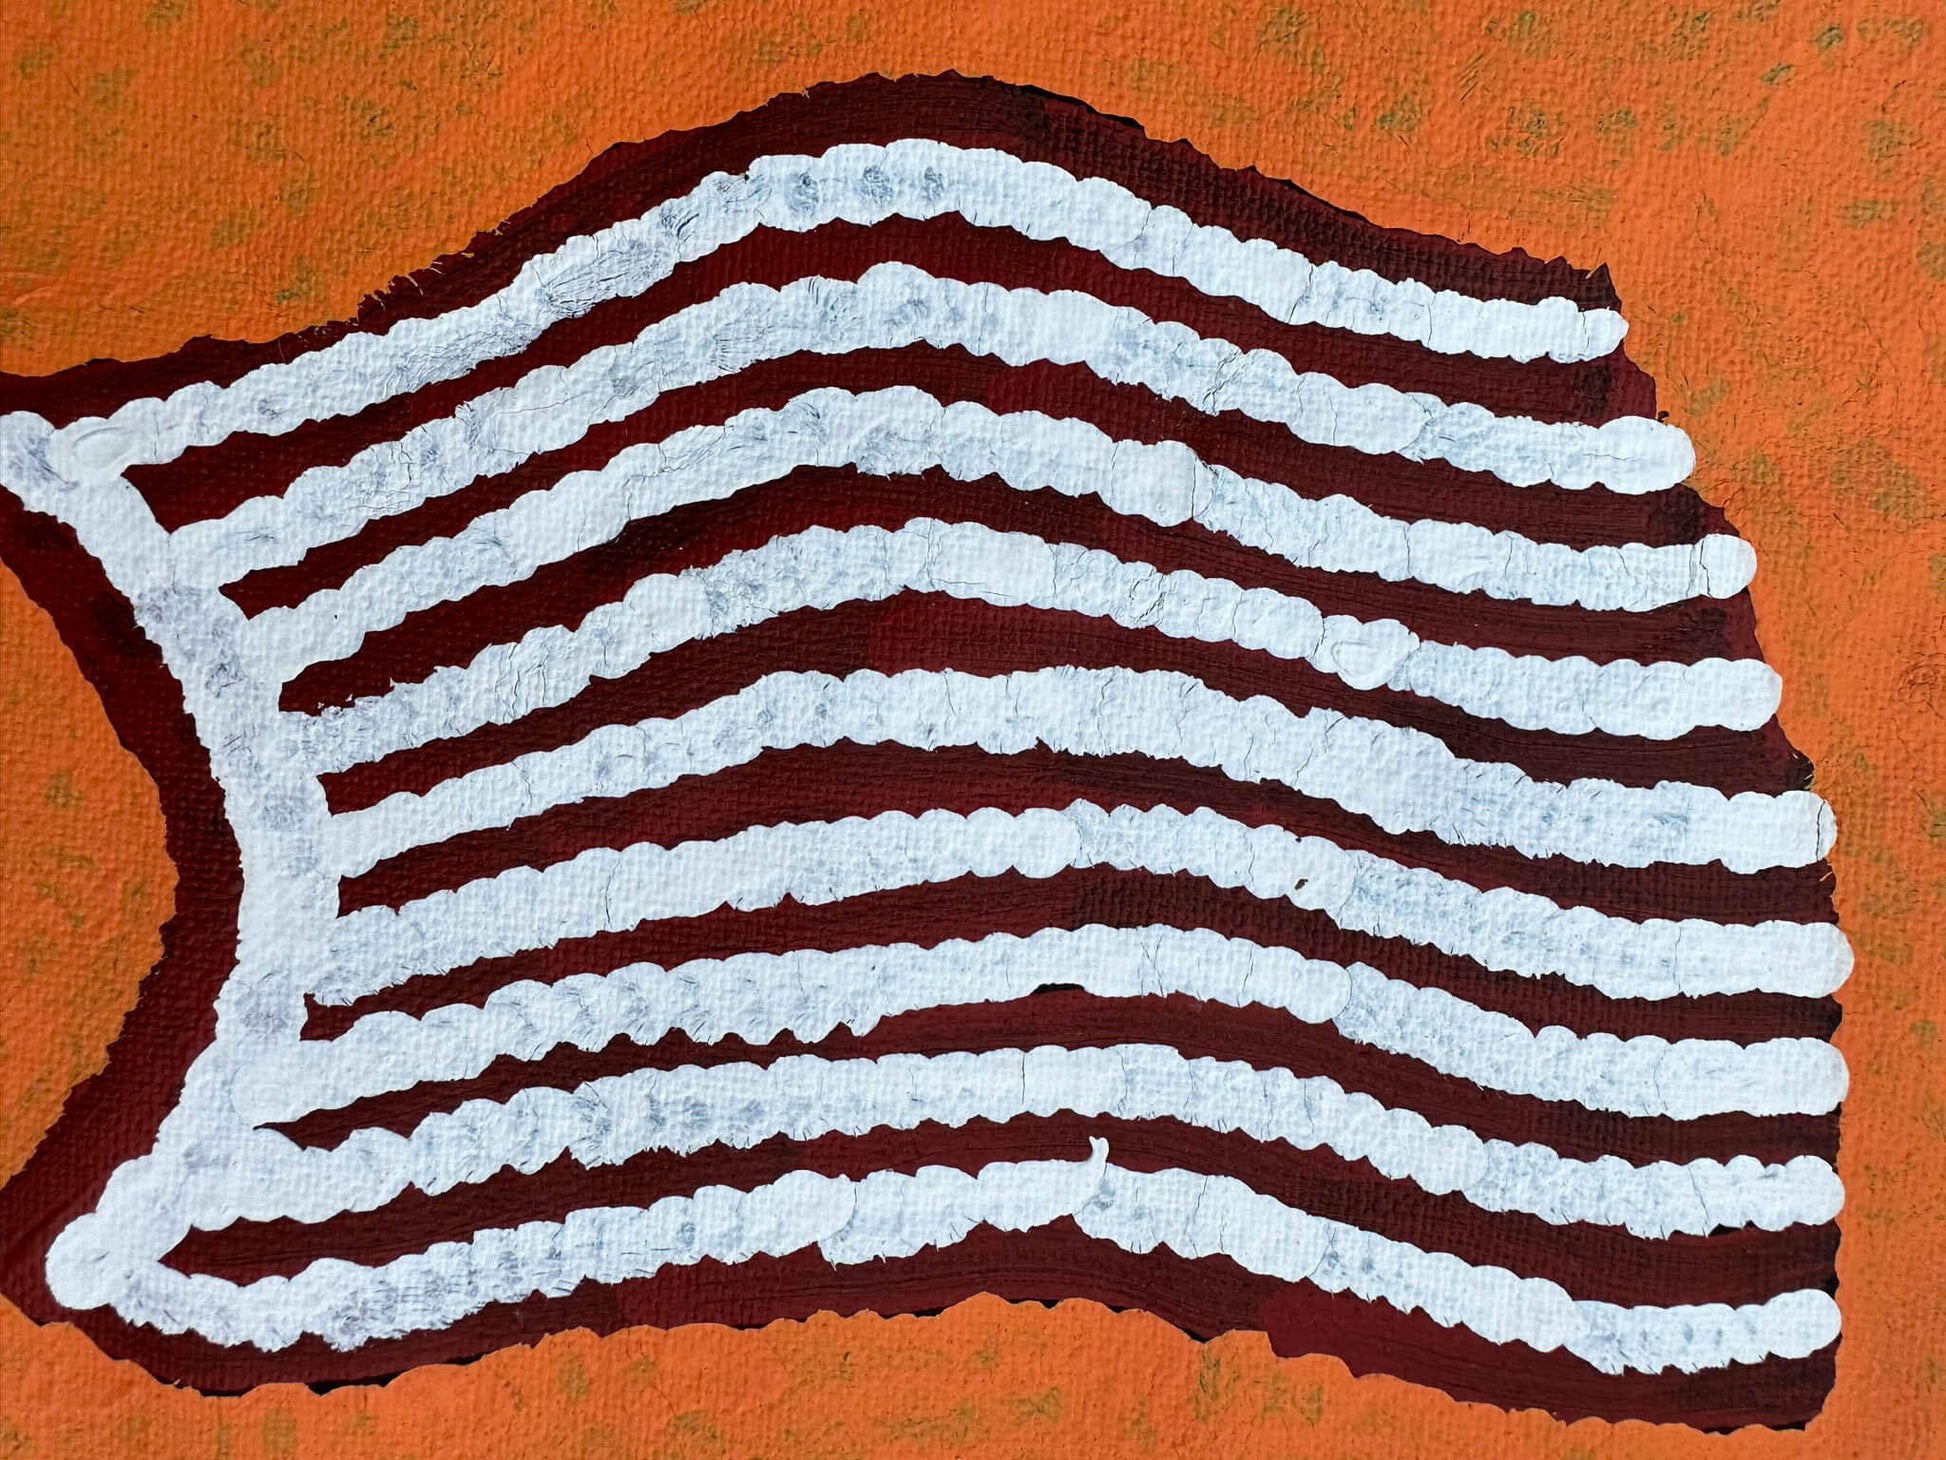 Jennifer Nginana Mitchell + Western Desert Artist + Painting + Symbolism + Iconography + Traditional Art + Aerial Artwork + Darwin Based Gallery + Indigenous Art + Aboriginal Art + Australian Art